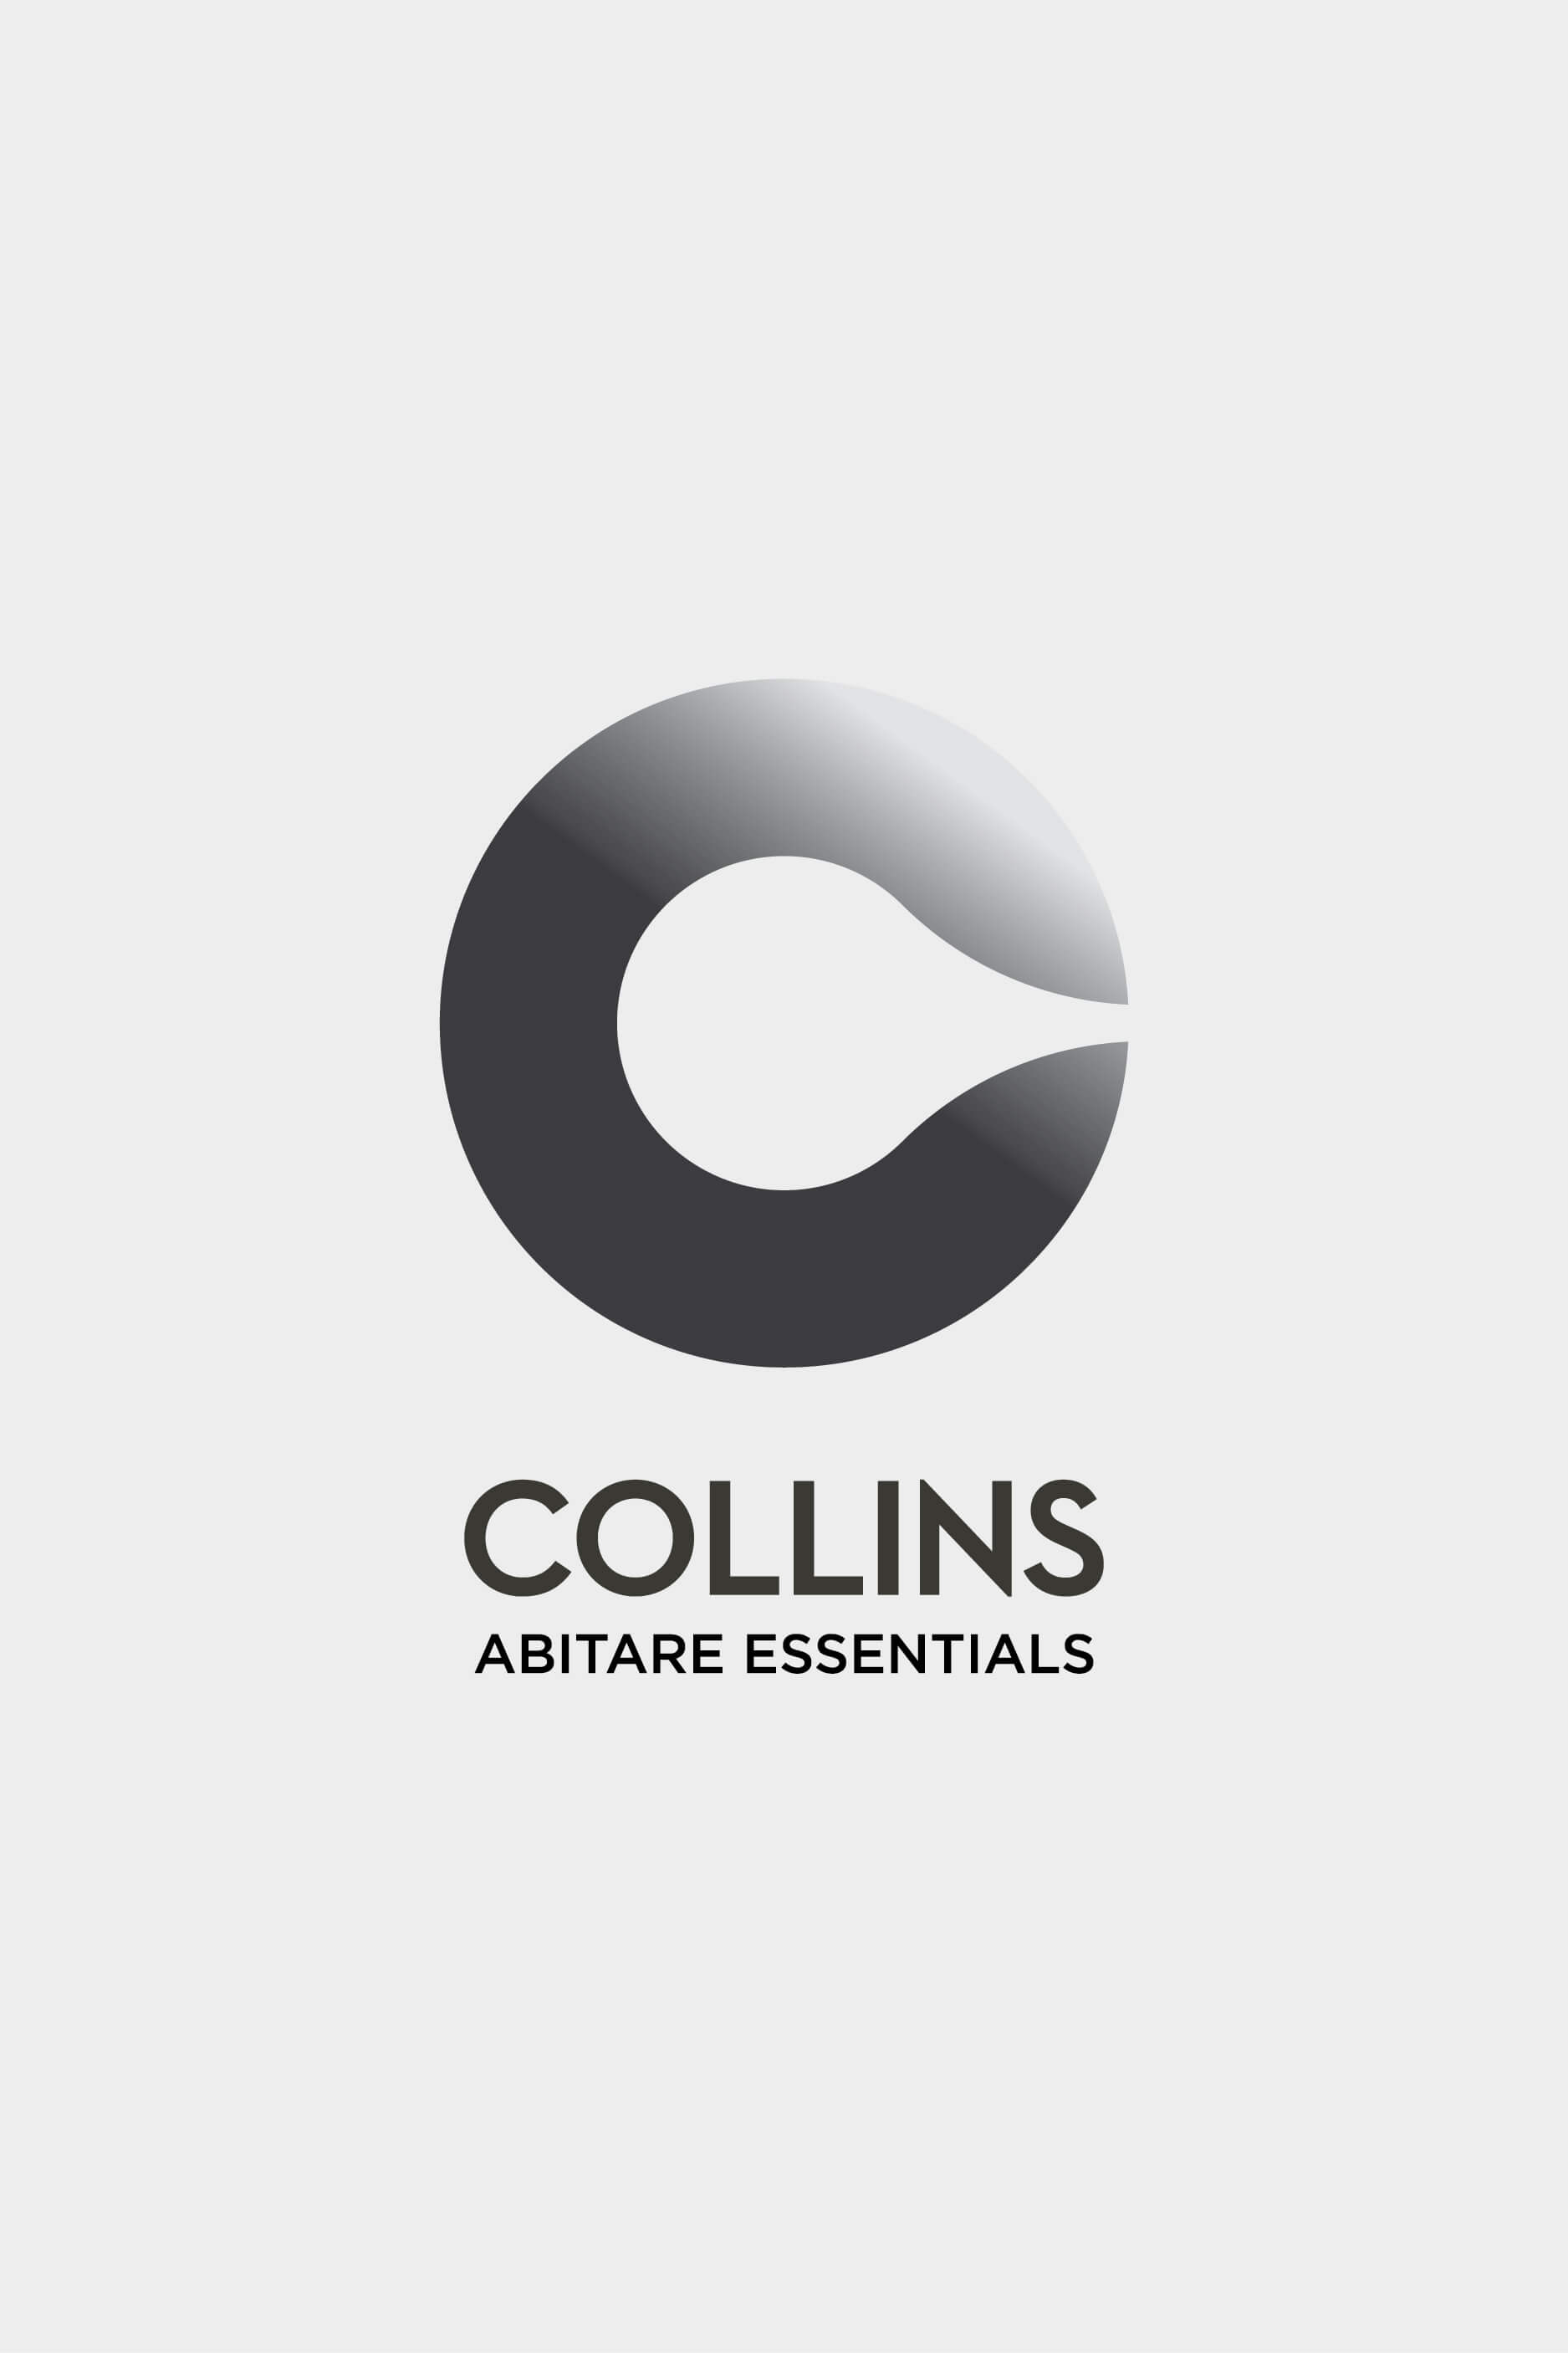 COLLINS - Brand Identity